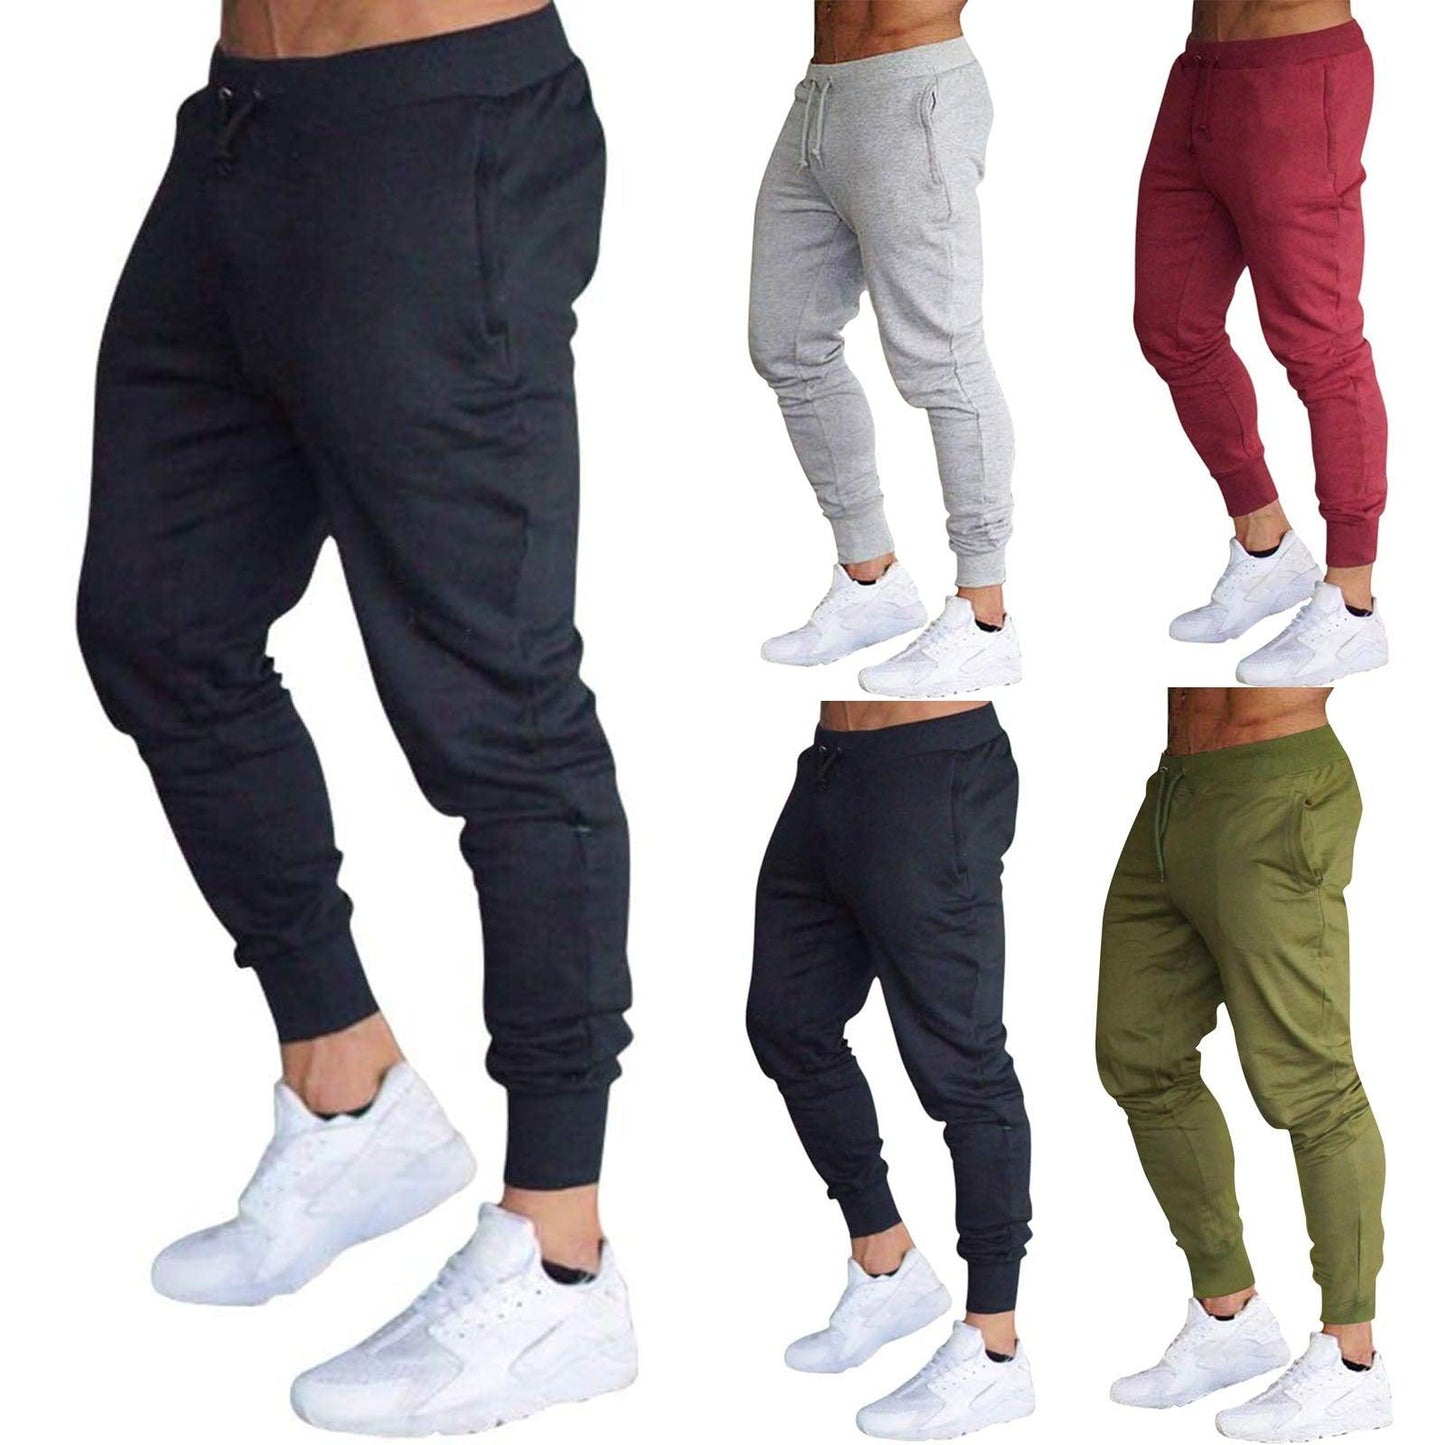 Men's Workout Stretch High Waist Slim Fit Sweatpants